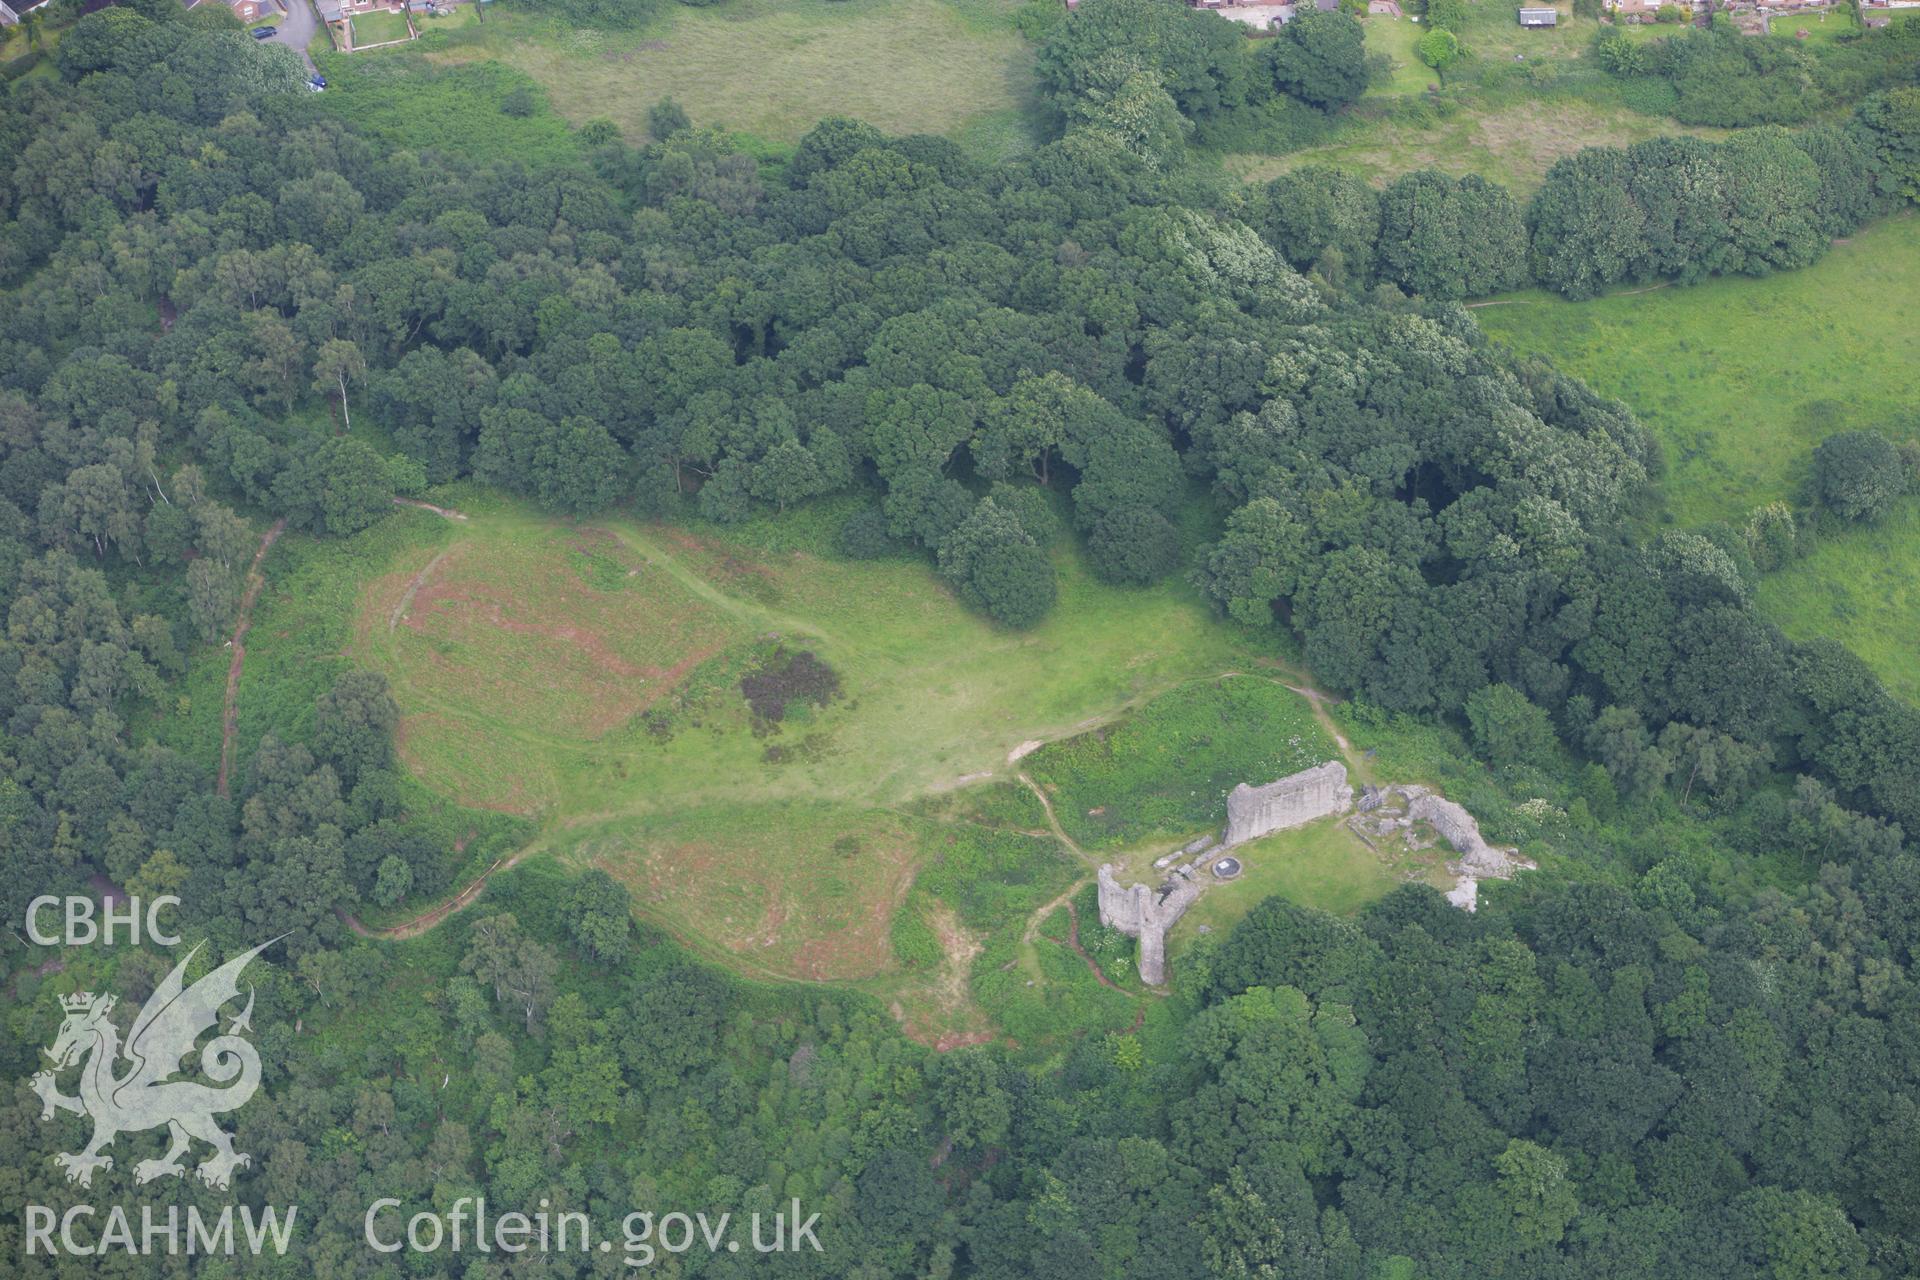 RCAHMW colour oblique photograph of Caergwrle Castle. Taken by Toby Driver on 01/07/2008.